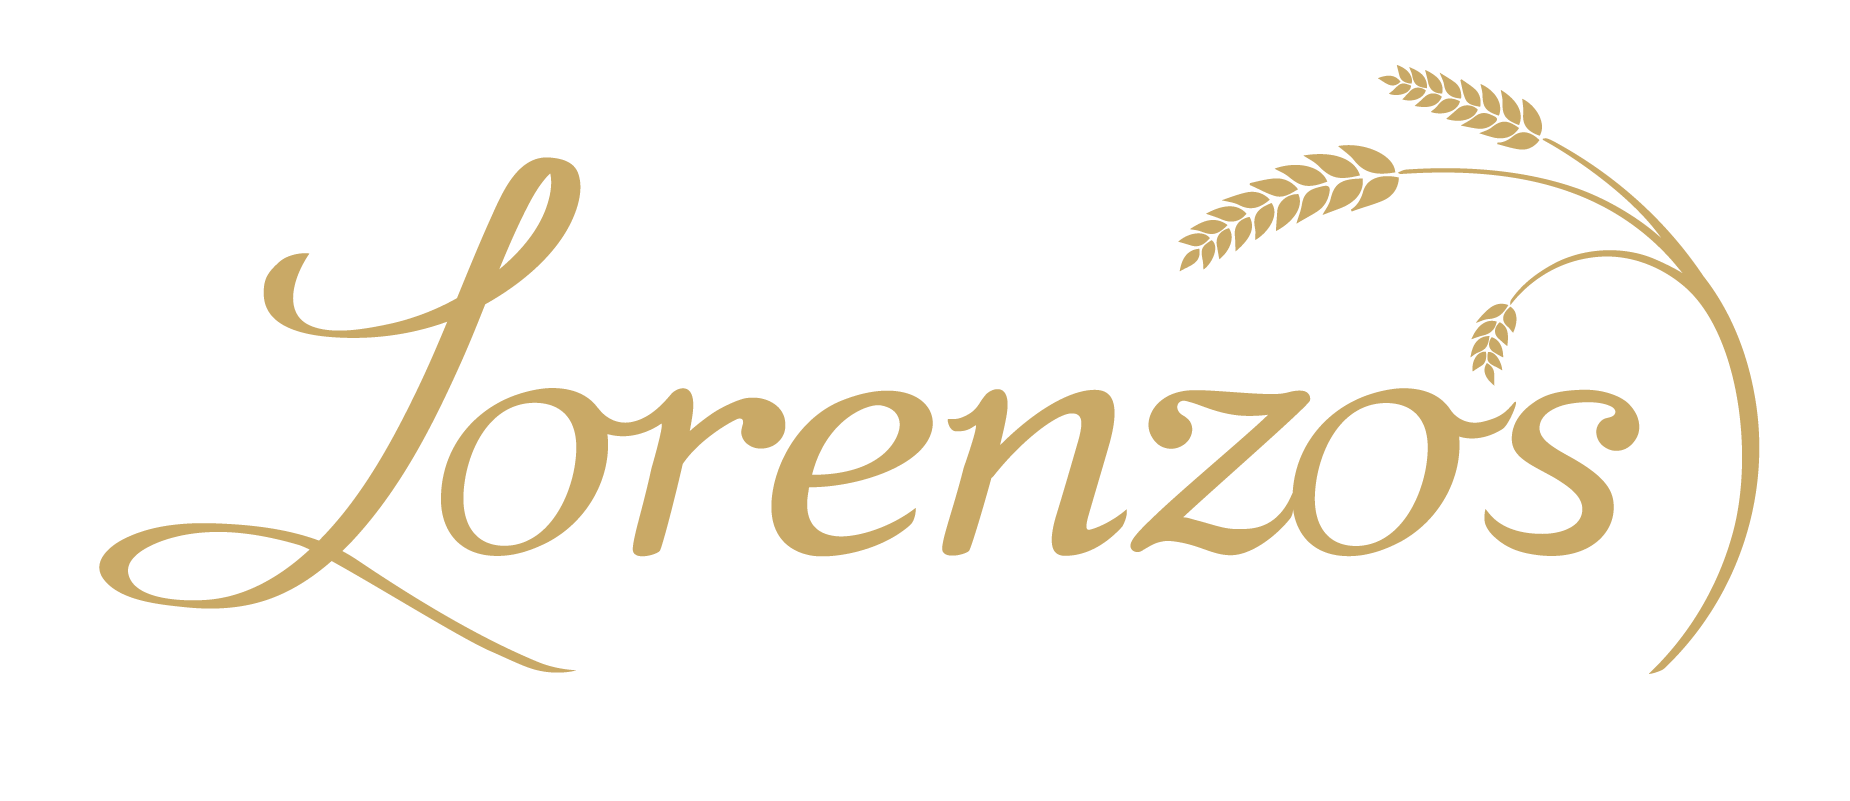 Lorenzo’s Artisan Bakery